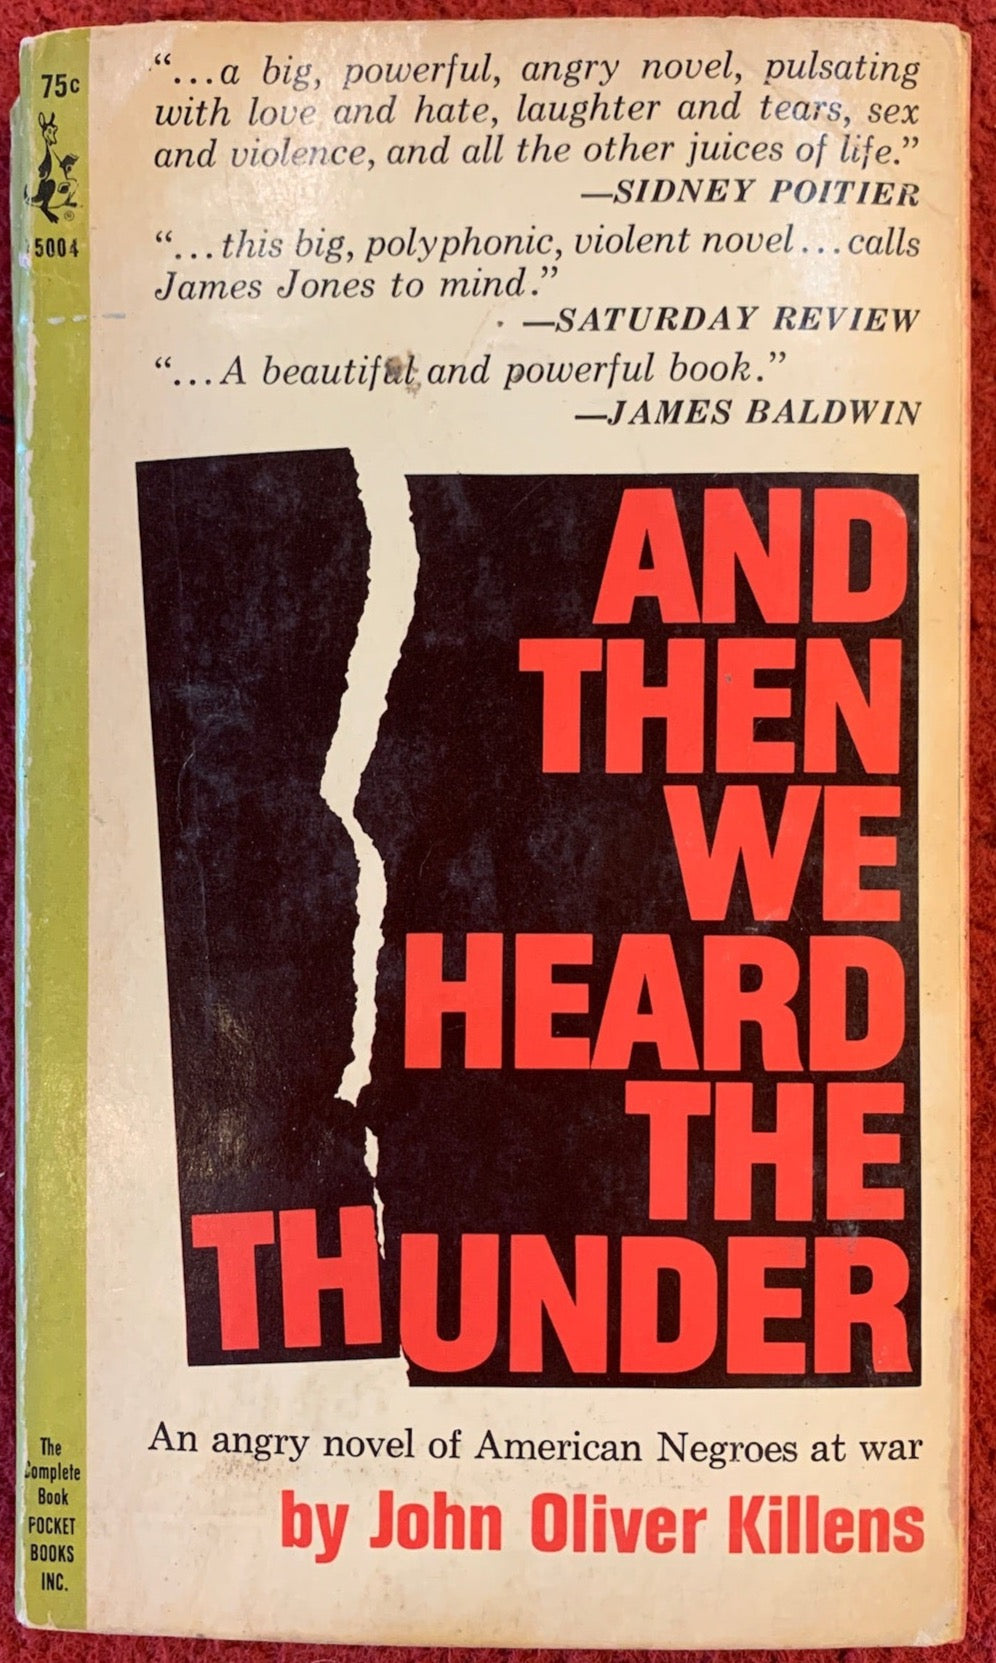 And Then We Heard The Thunder, John Oliver Killens, 1964, Pocket Books Inc.